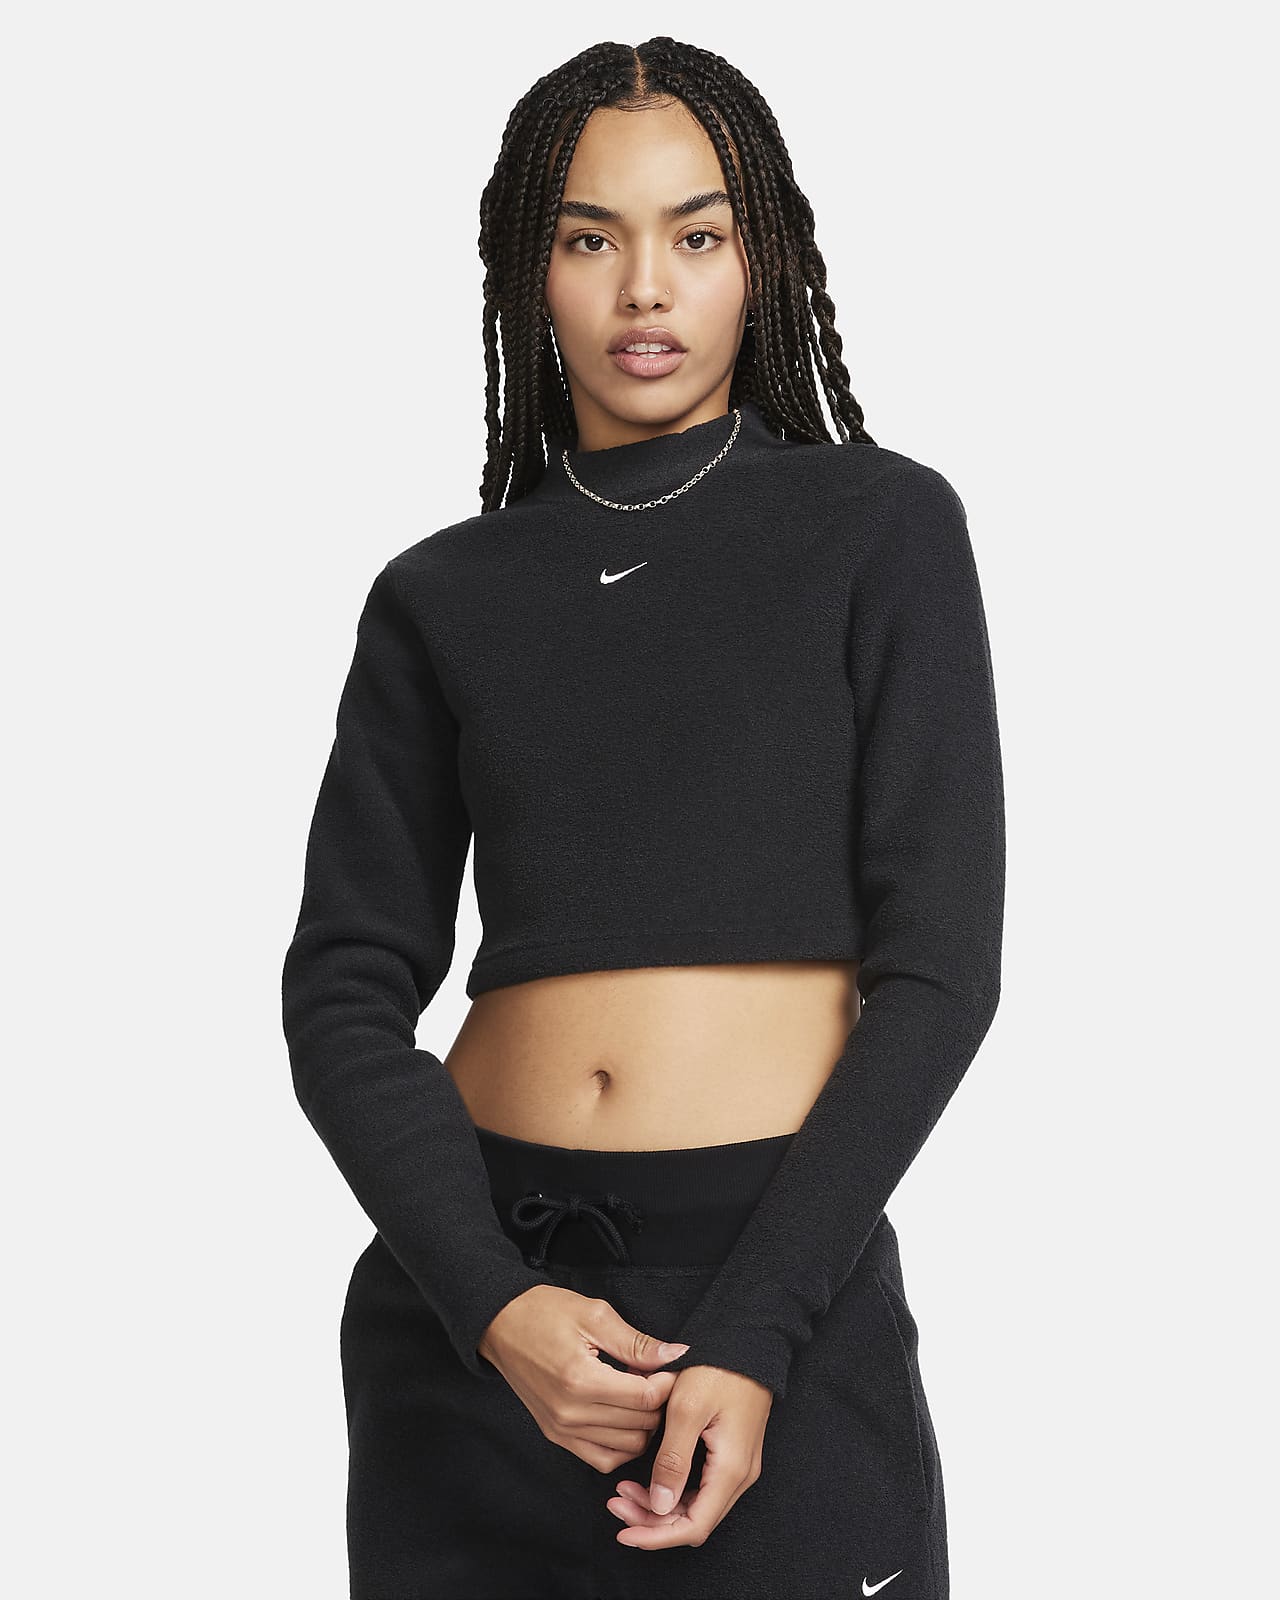 Nike Sportswear Phoenix langermet avkortet overdel med lang hals, smal passform og lun fleece til dame